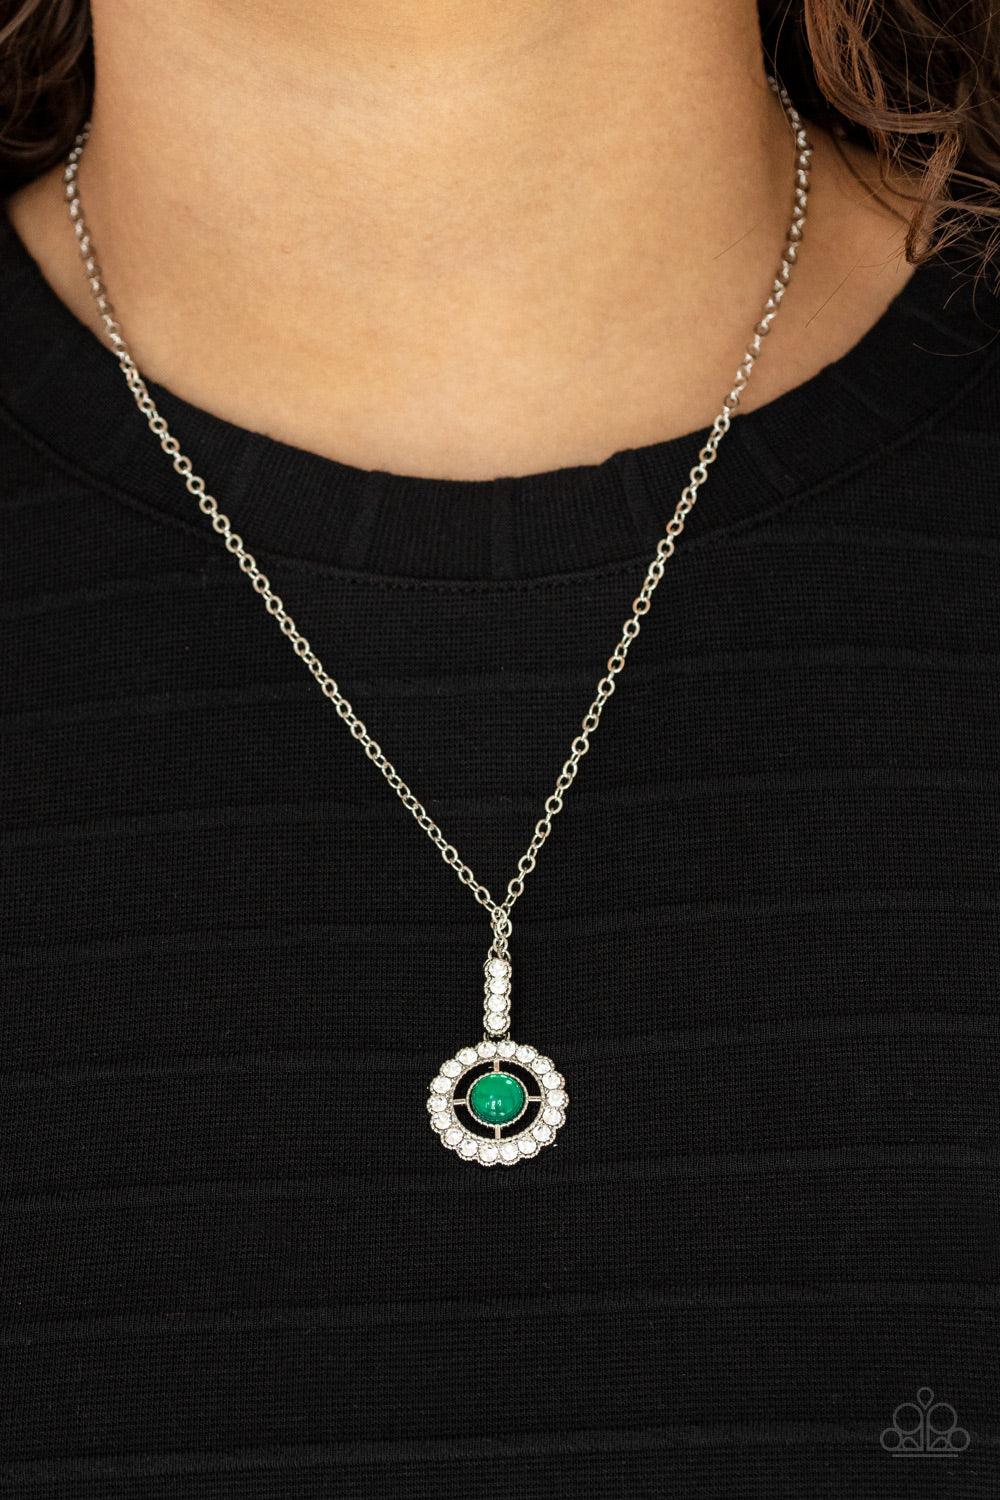 Springtime Twinkle Green Necklace - Jewelry by Bretta